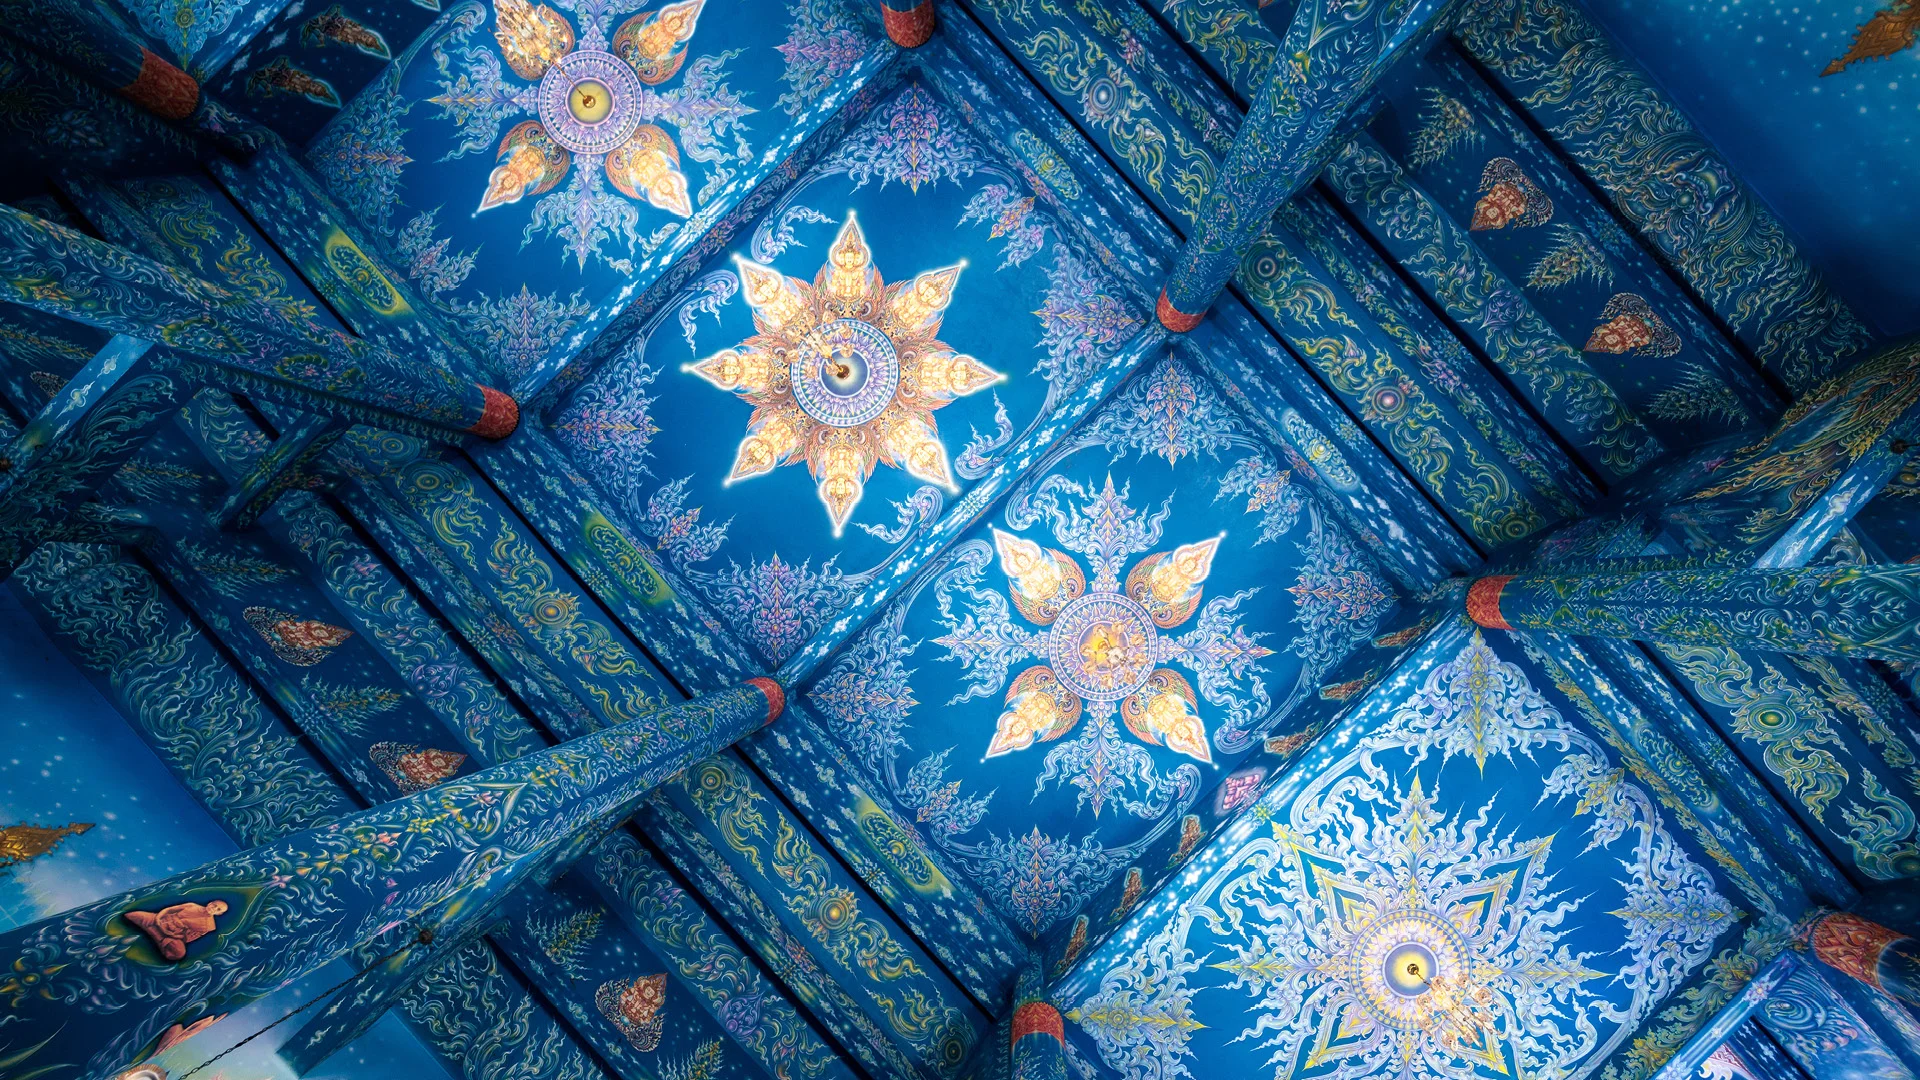 Detail of the ceiling of Wat Rong Suea Ten aka blue temple, Chiang Rai, Thailand